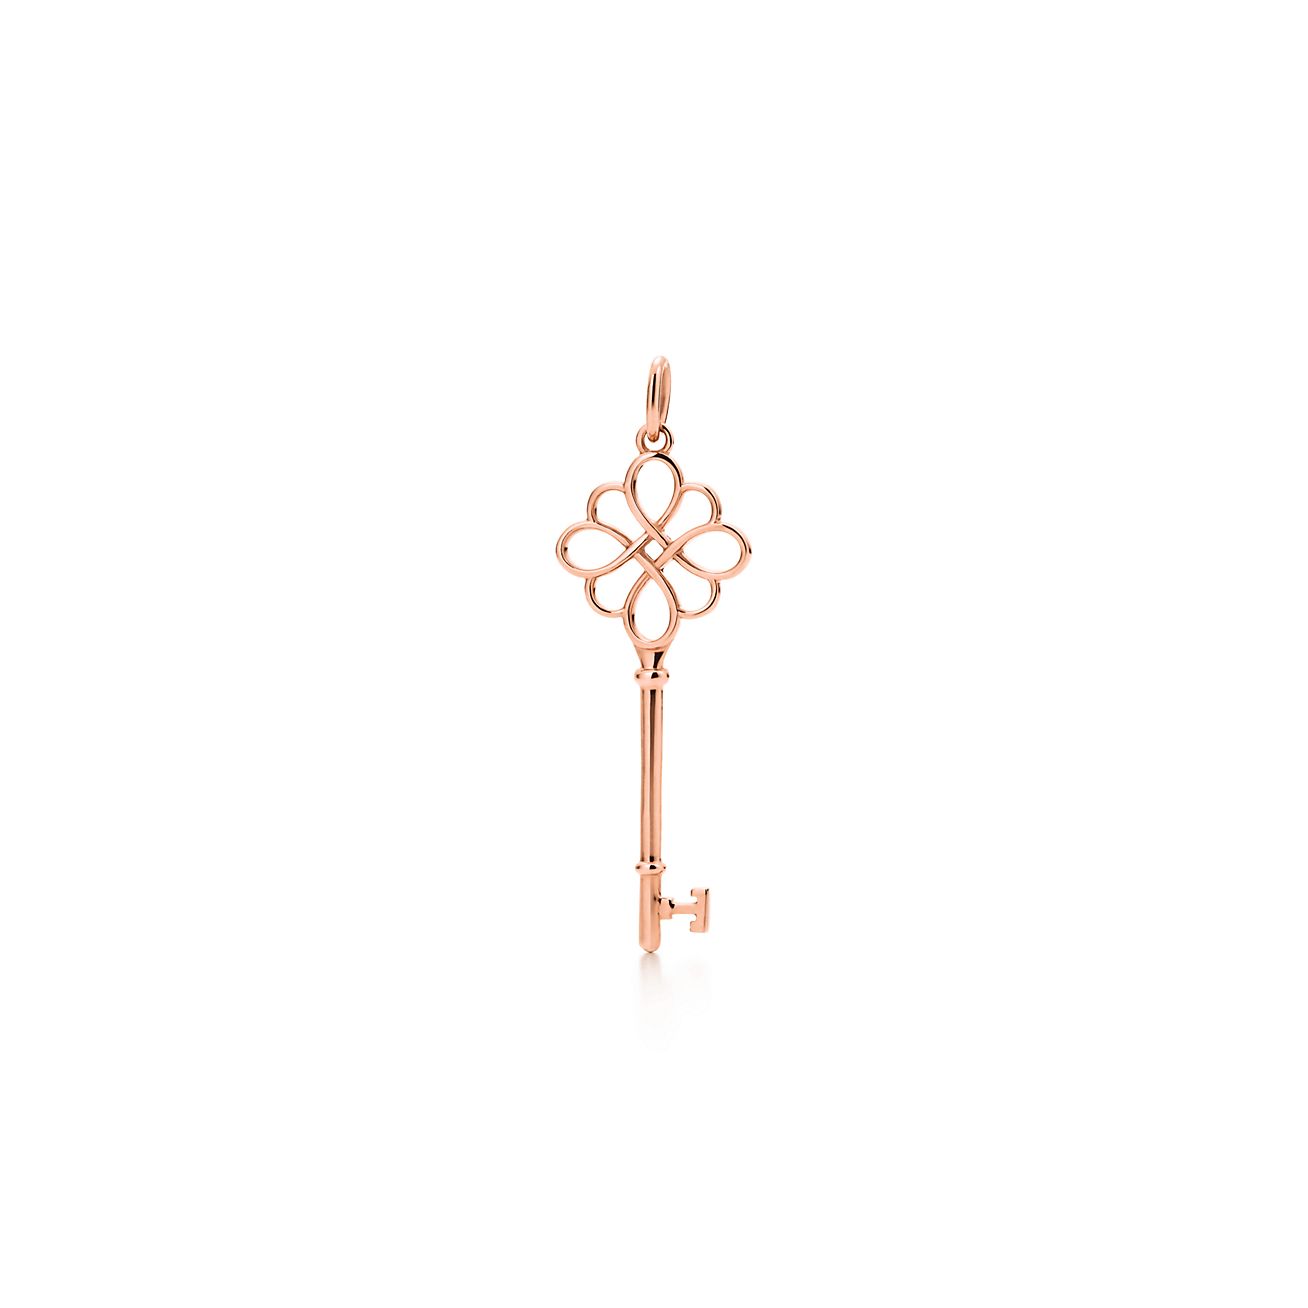 Tiffany Keys knot key pendant in 18k 